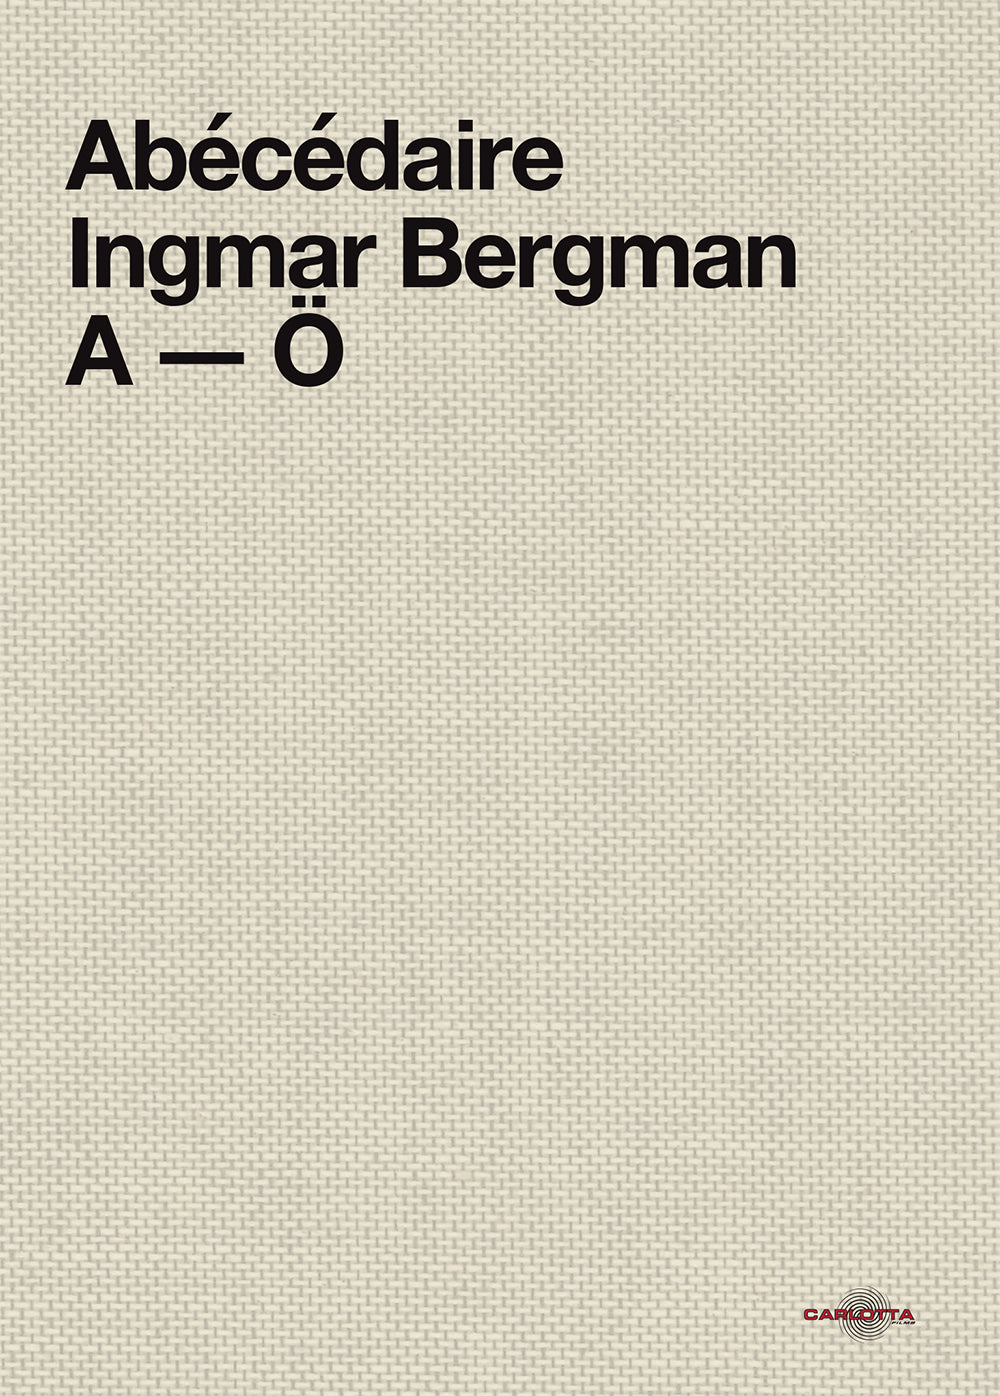 Abécédaire Ingmar Bergman de A à Ö - Livre